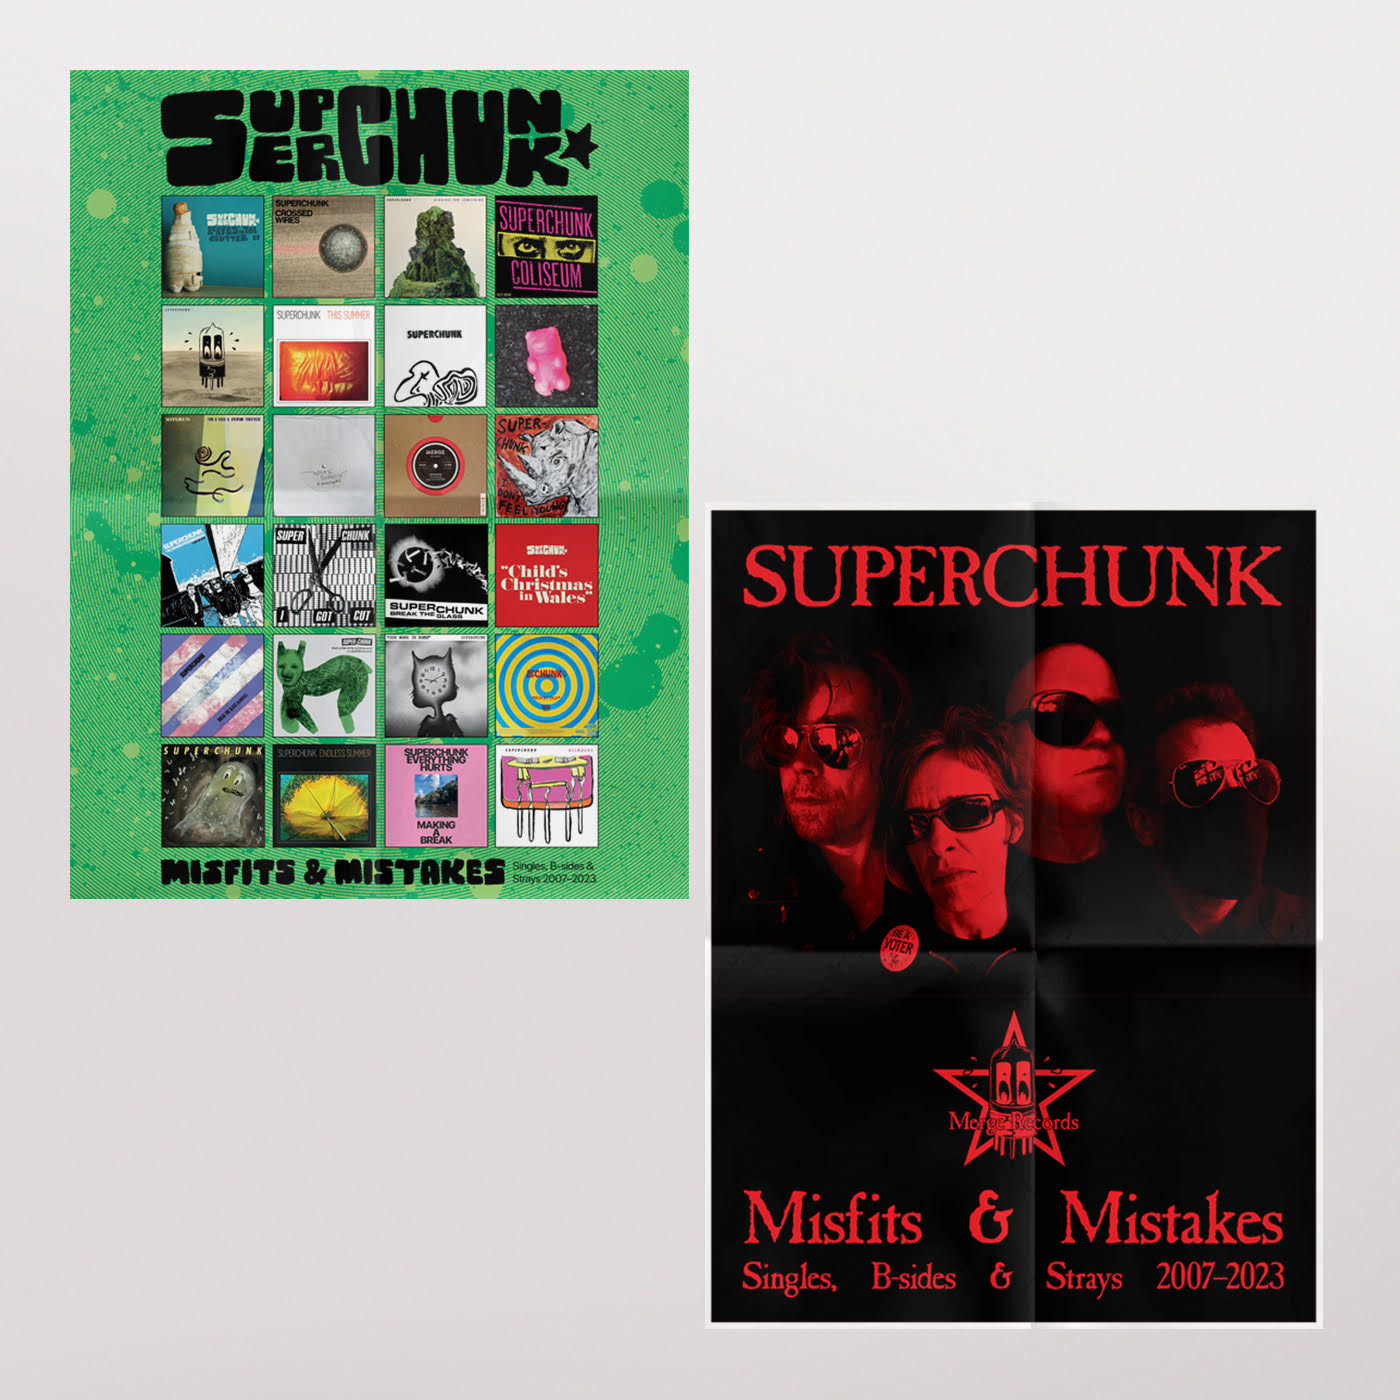 Superchunk - Misfits & Mistakes: Singles, B-Sides & Strays (2007-2023) 4LP / 2CD [PRE-ORDER]